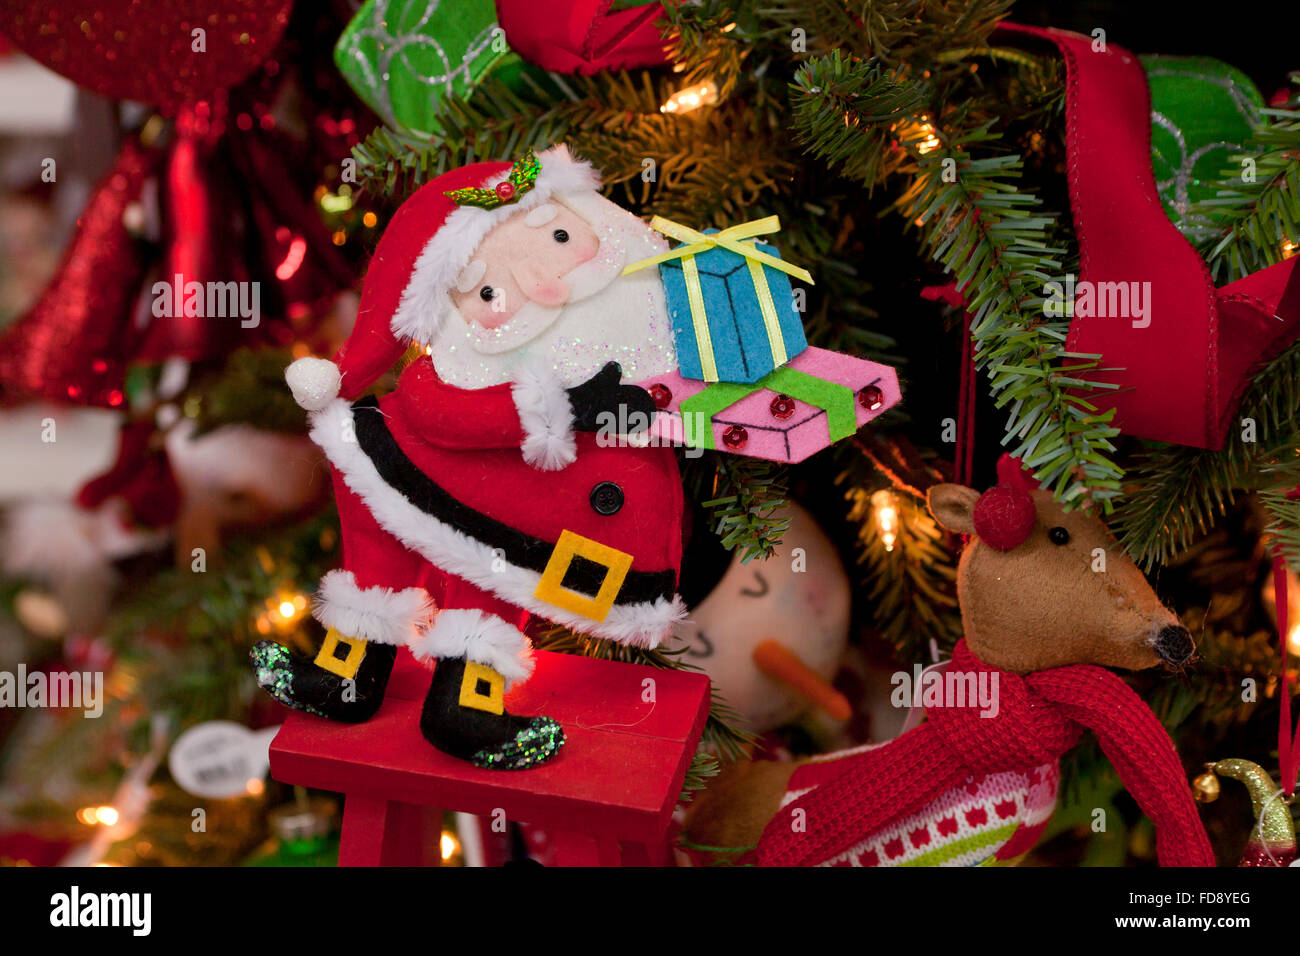 Santa Claus holding presents Christmas tree ornament Stock Photo